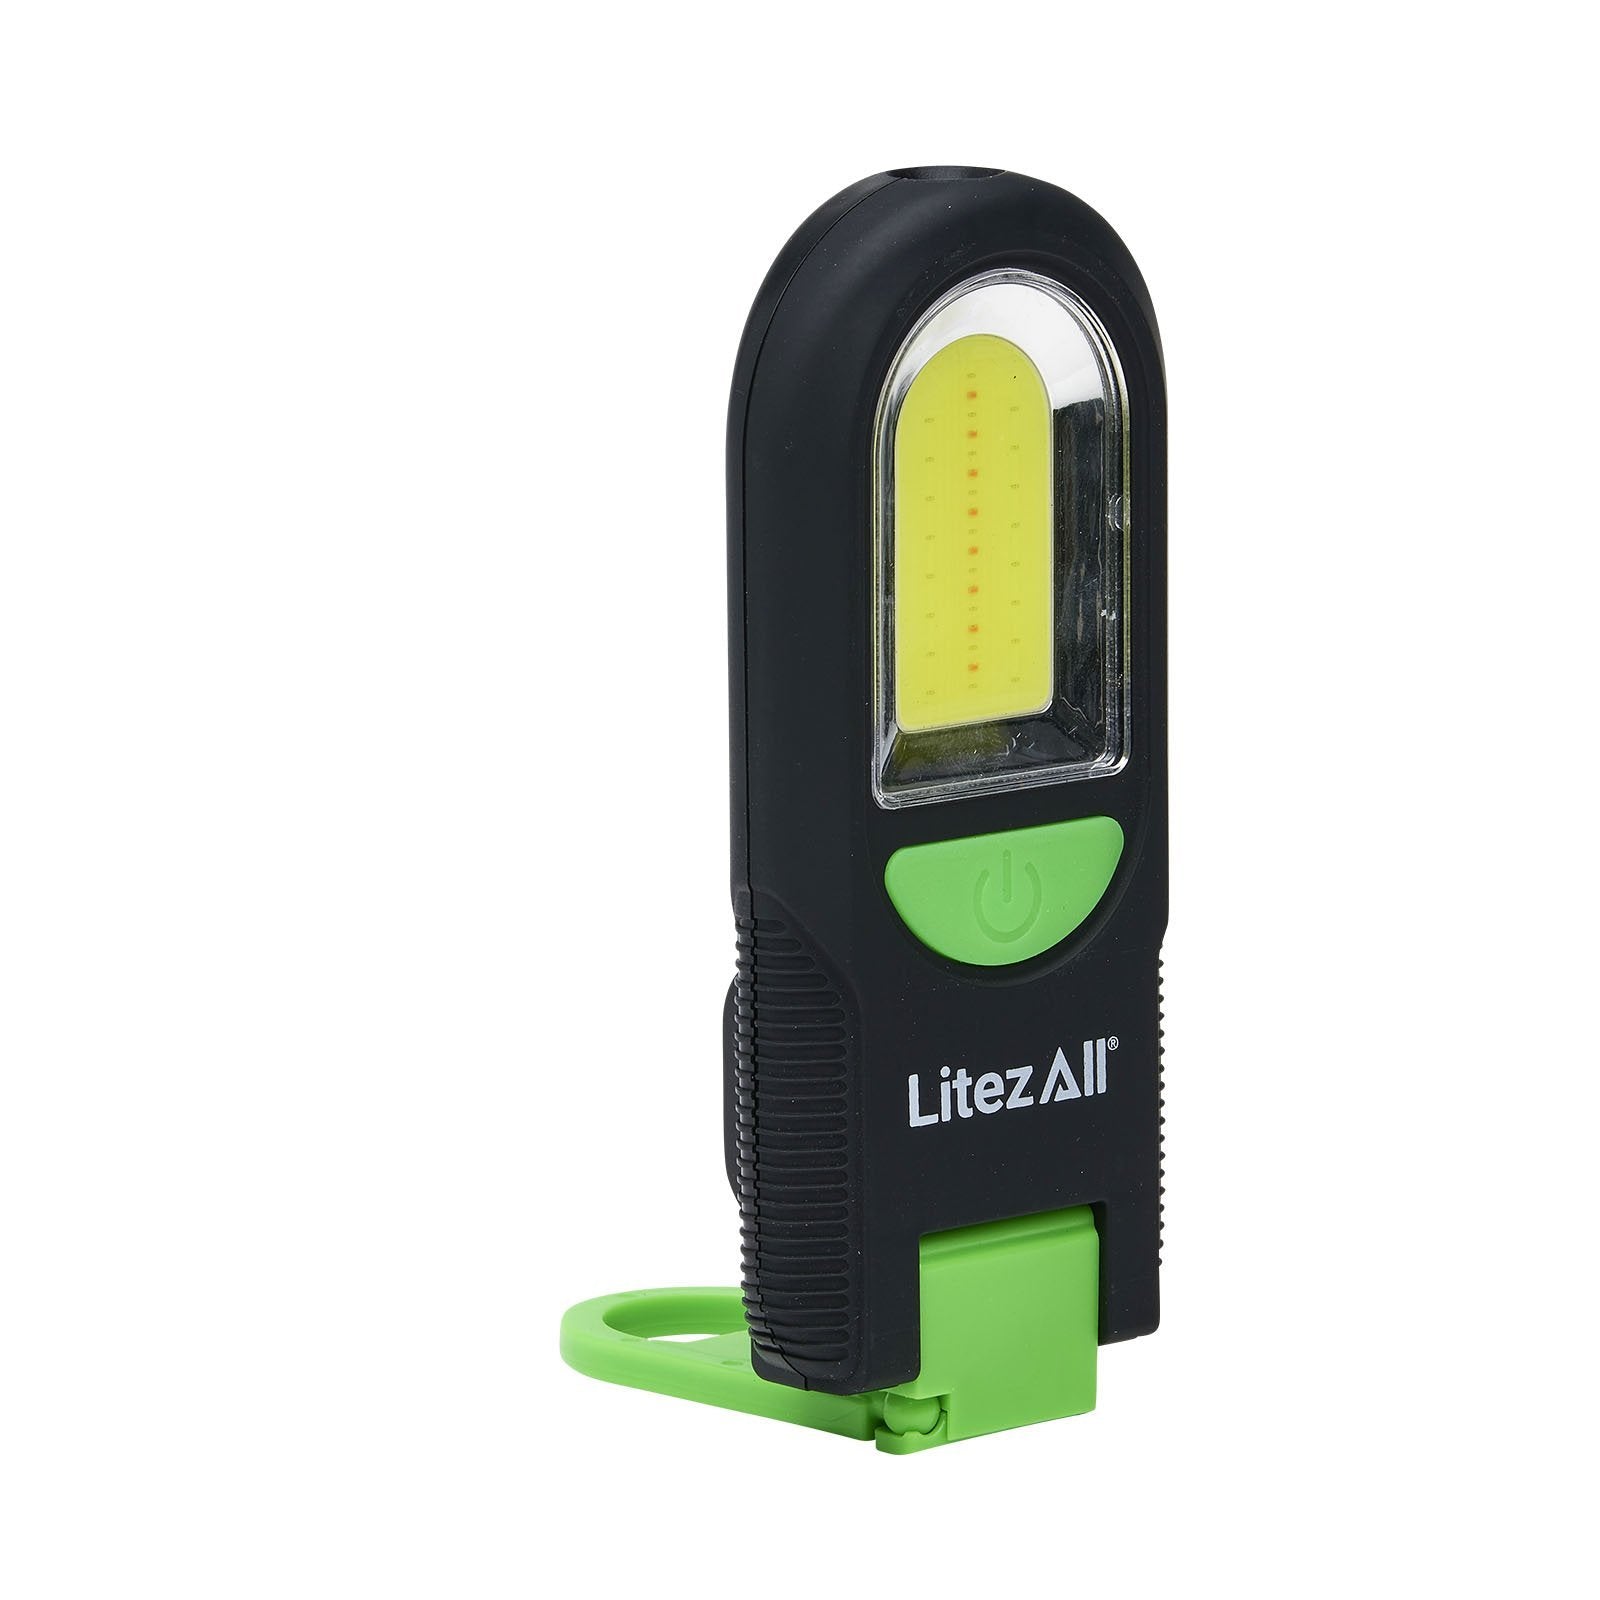 LitezAll Rechargeable Work Light and Emergency Light - LitezAll - Work Lights - 25